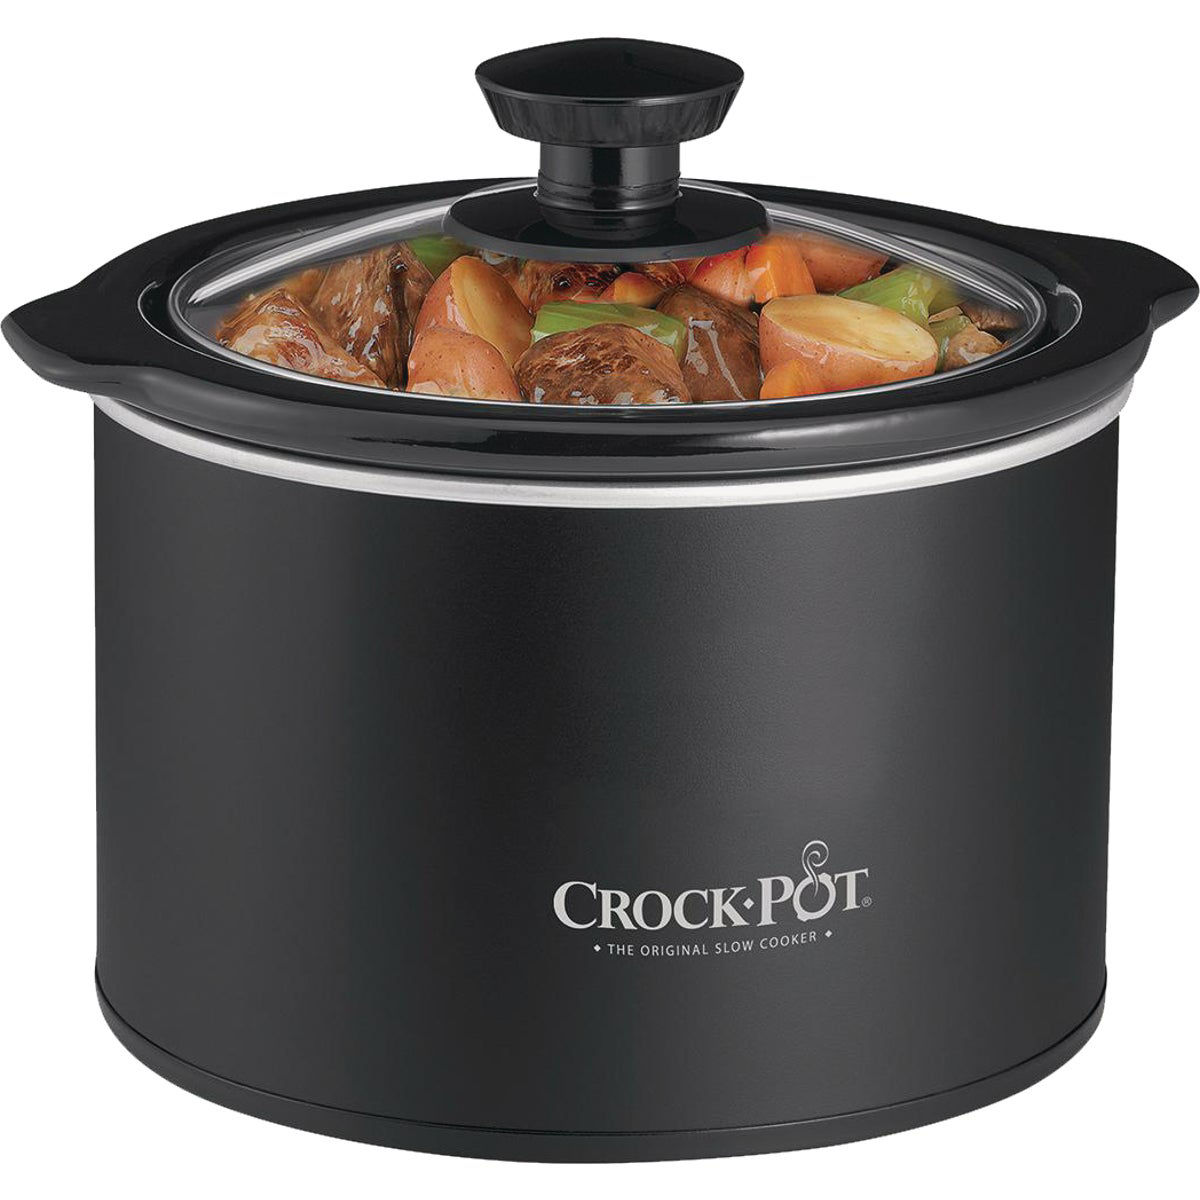 CrockPot 5-Quart Manual Slow Cooker